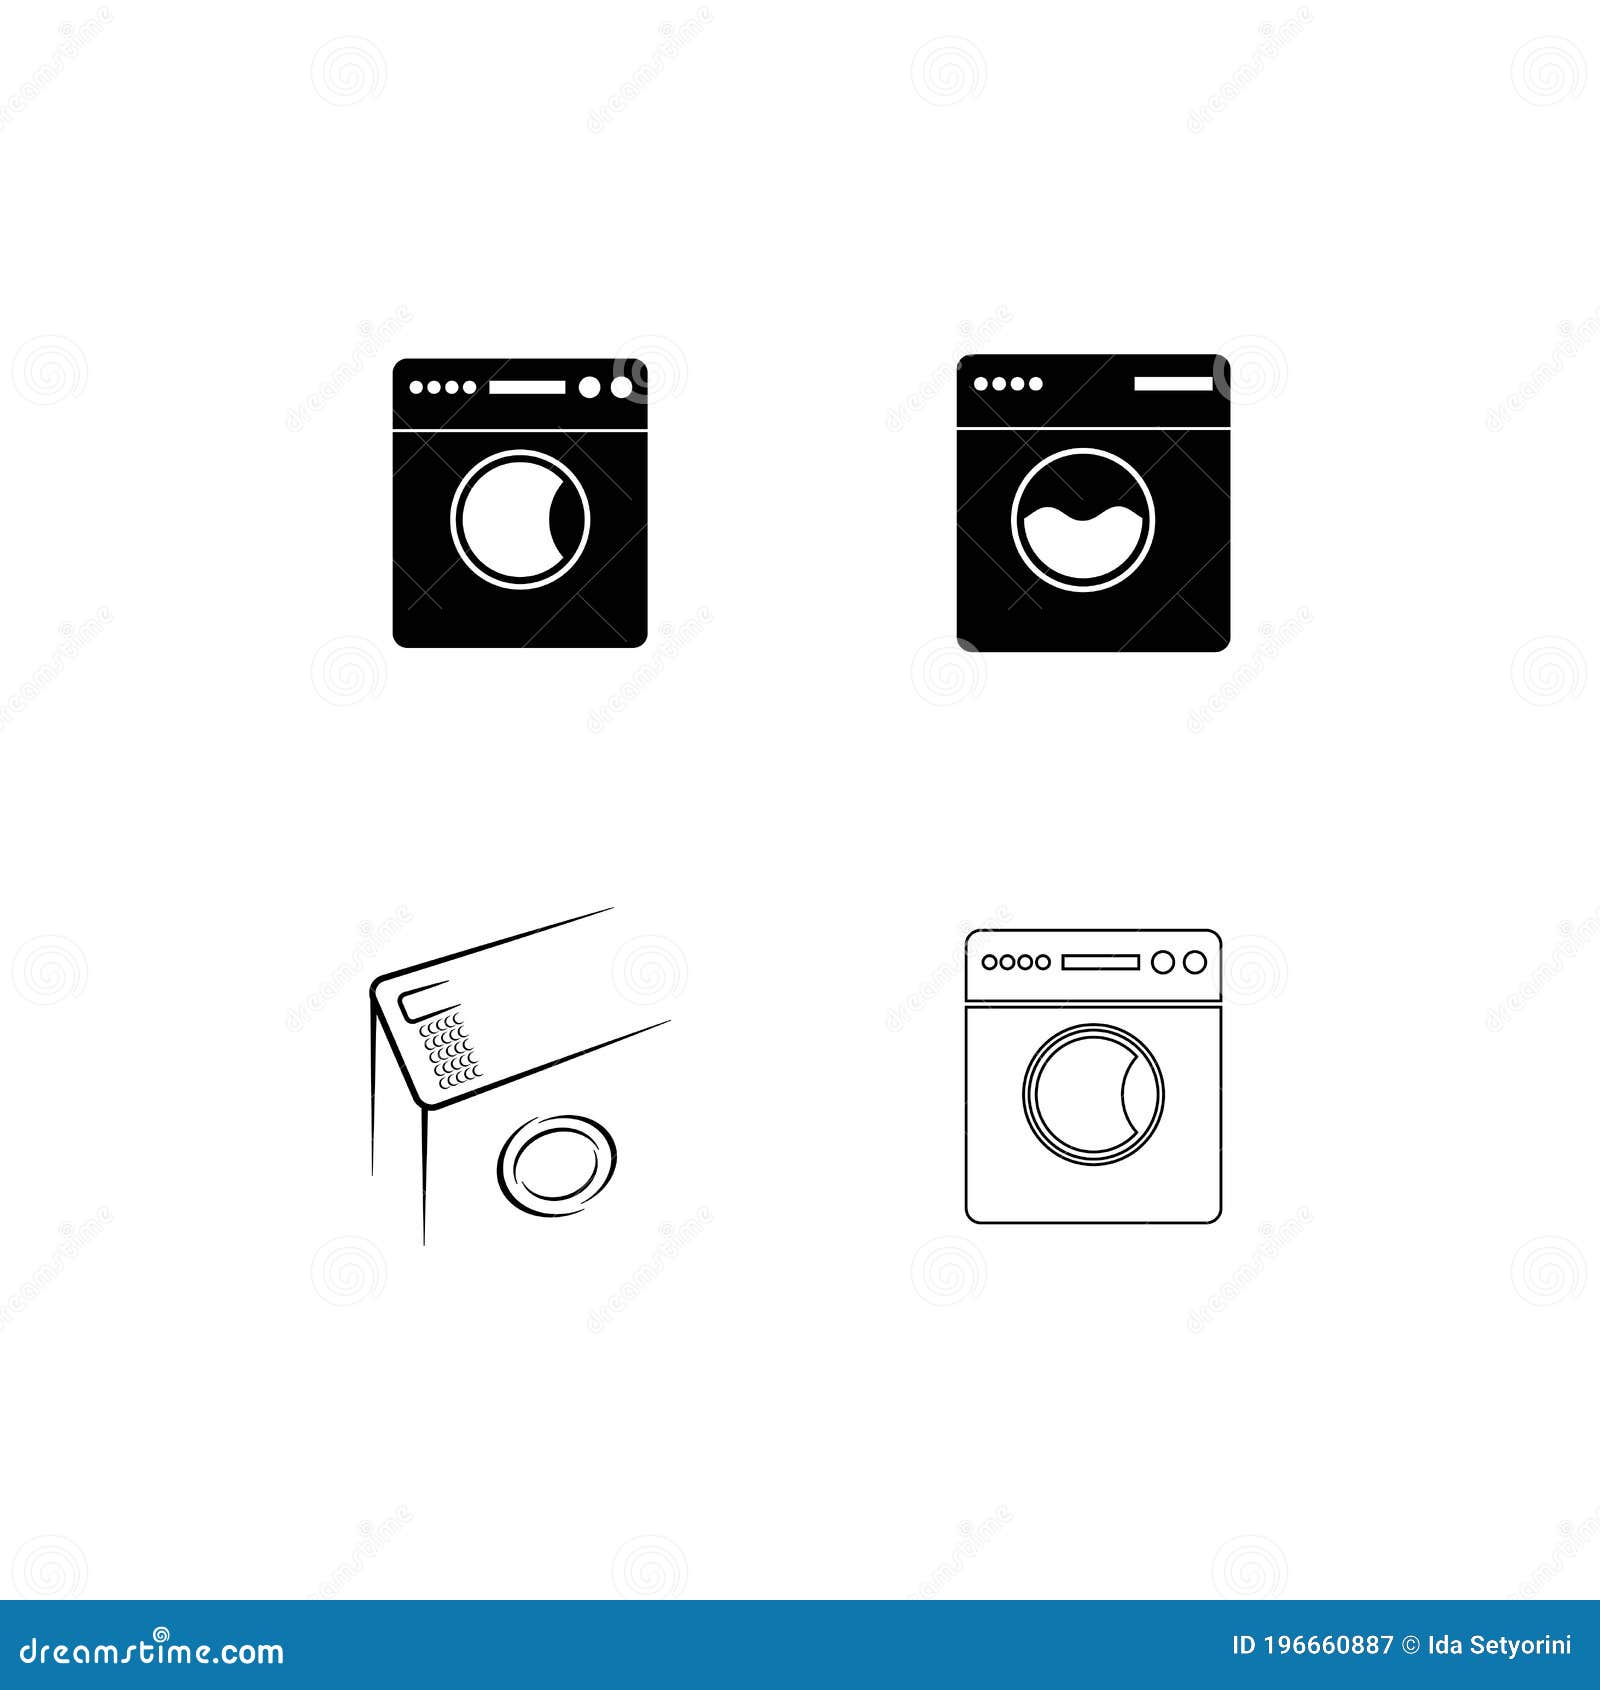 washing machne logo